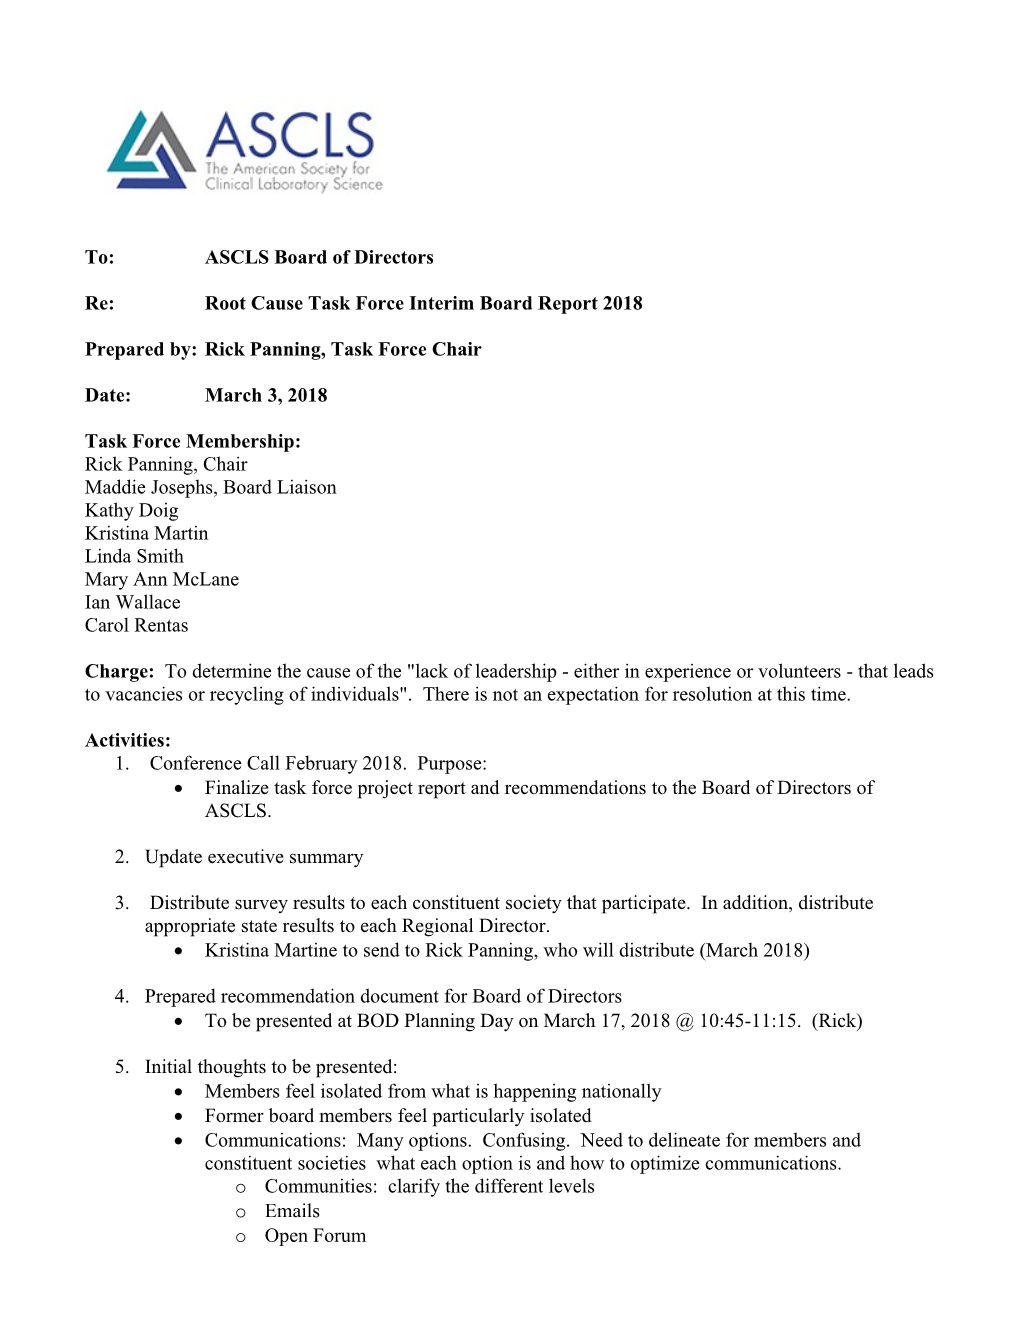 Re: Root Cause Task Force Interim Board Report 2018